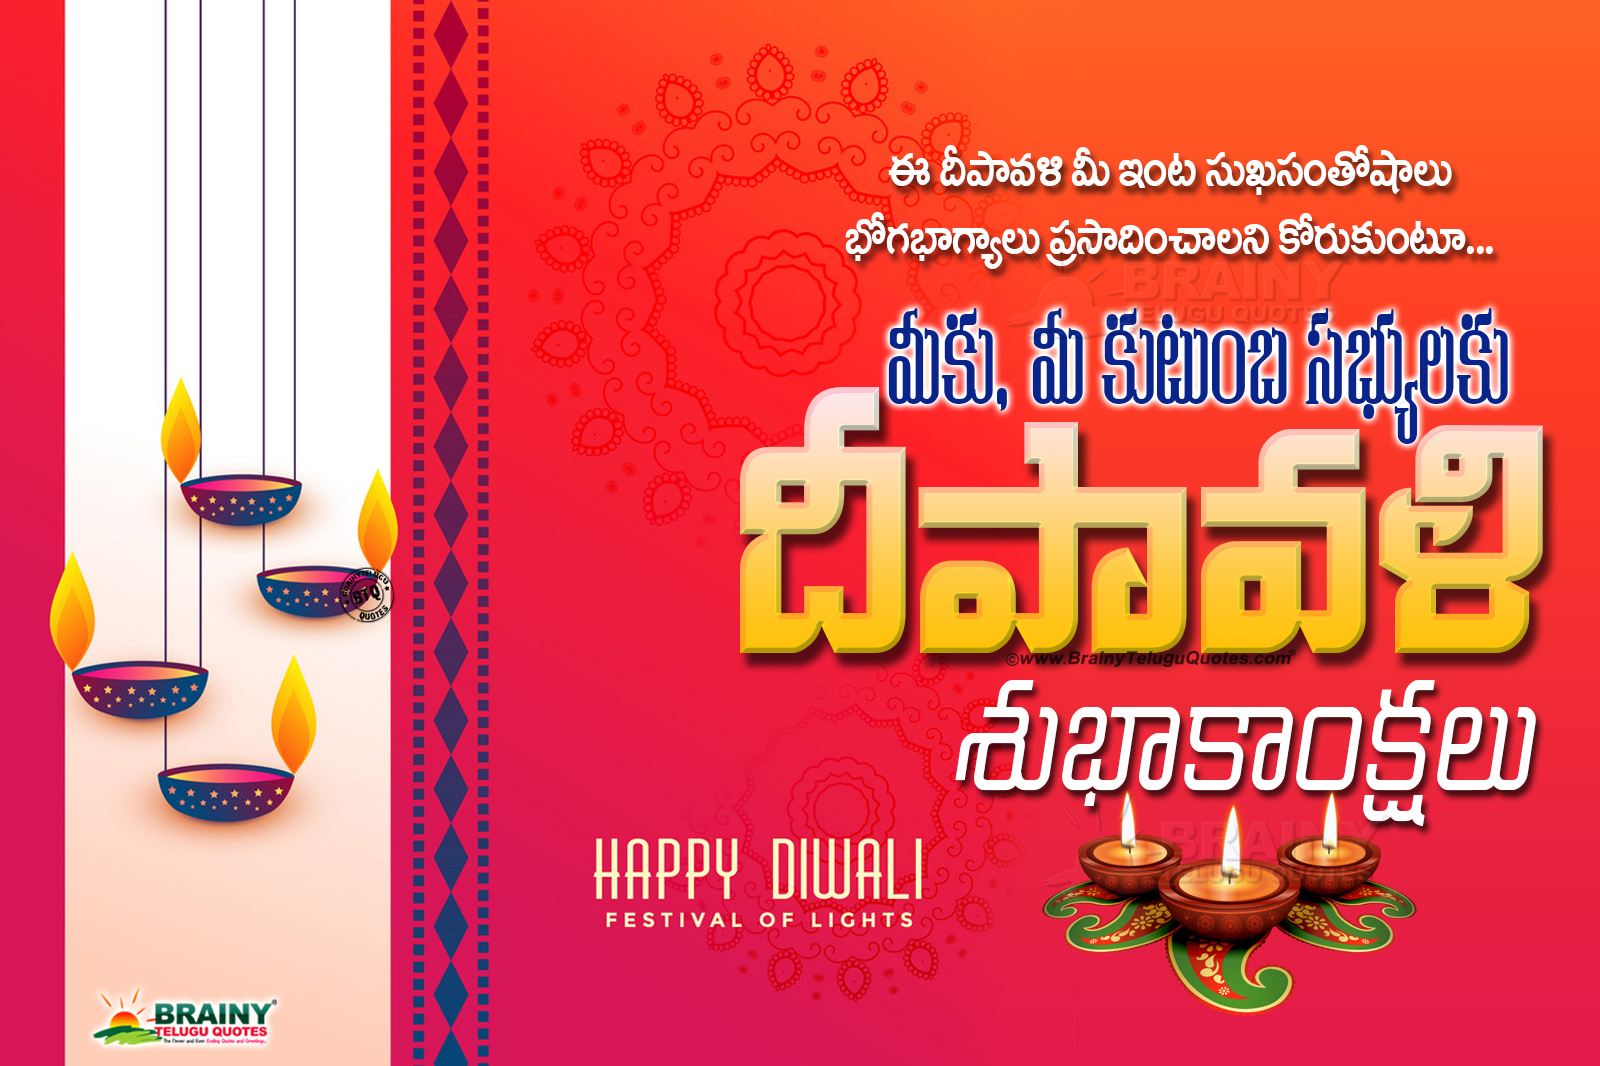 Happy Diwali Greetings In Telugu, Telugu Diwali Wishes - Poster - HD Wallpaper 